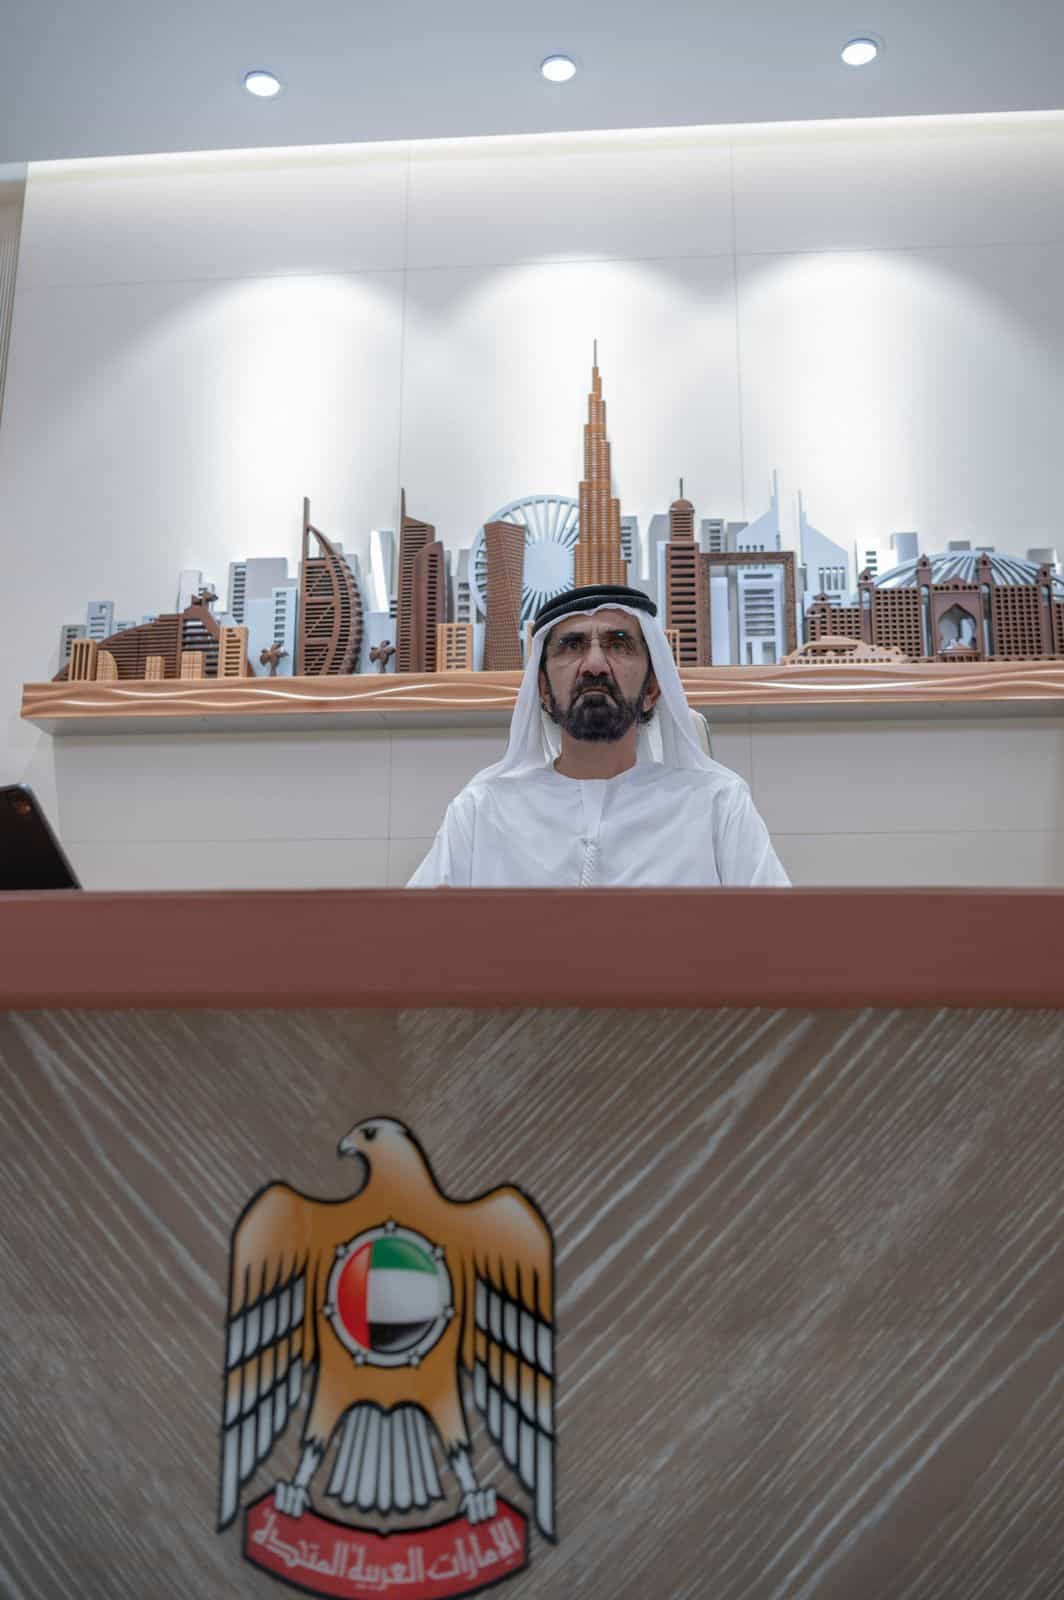 Hans hátign Sheikh Mohammed bin Rashid